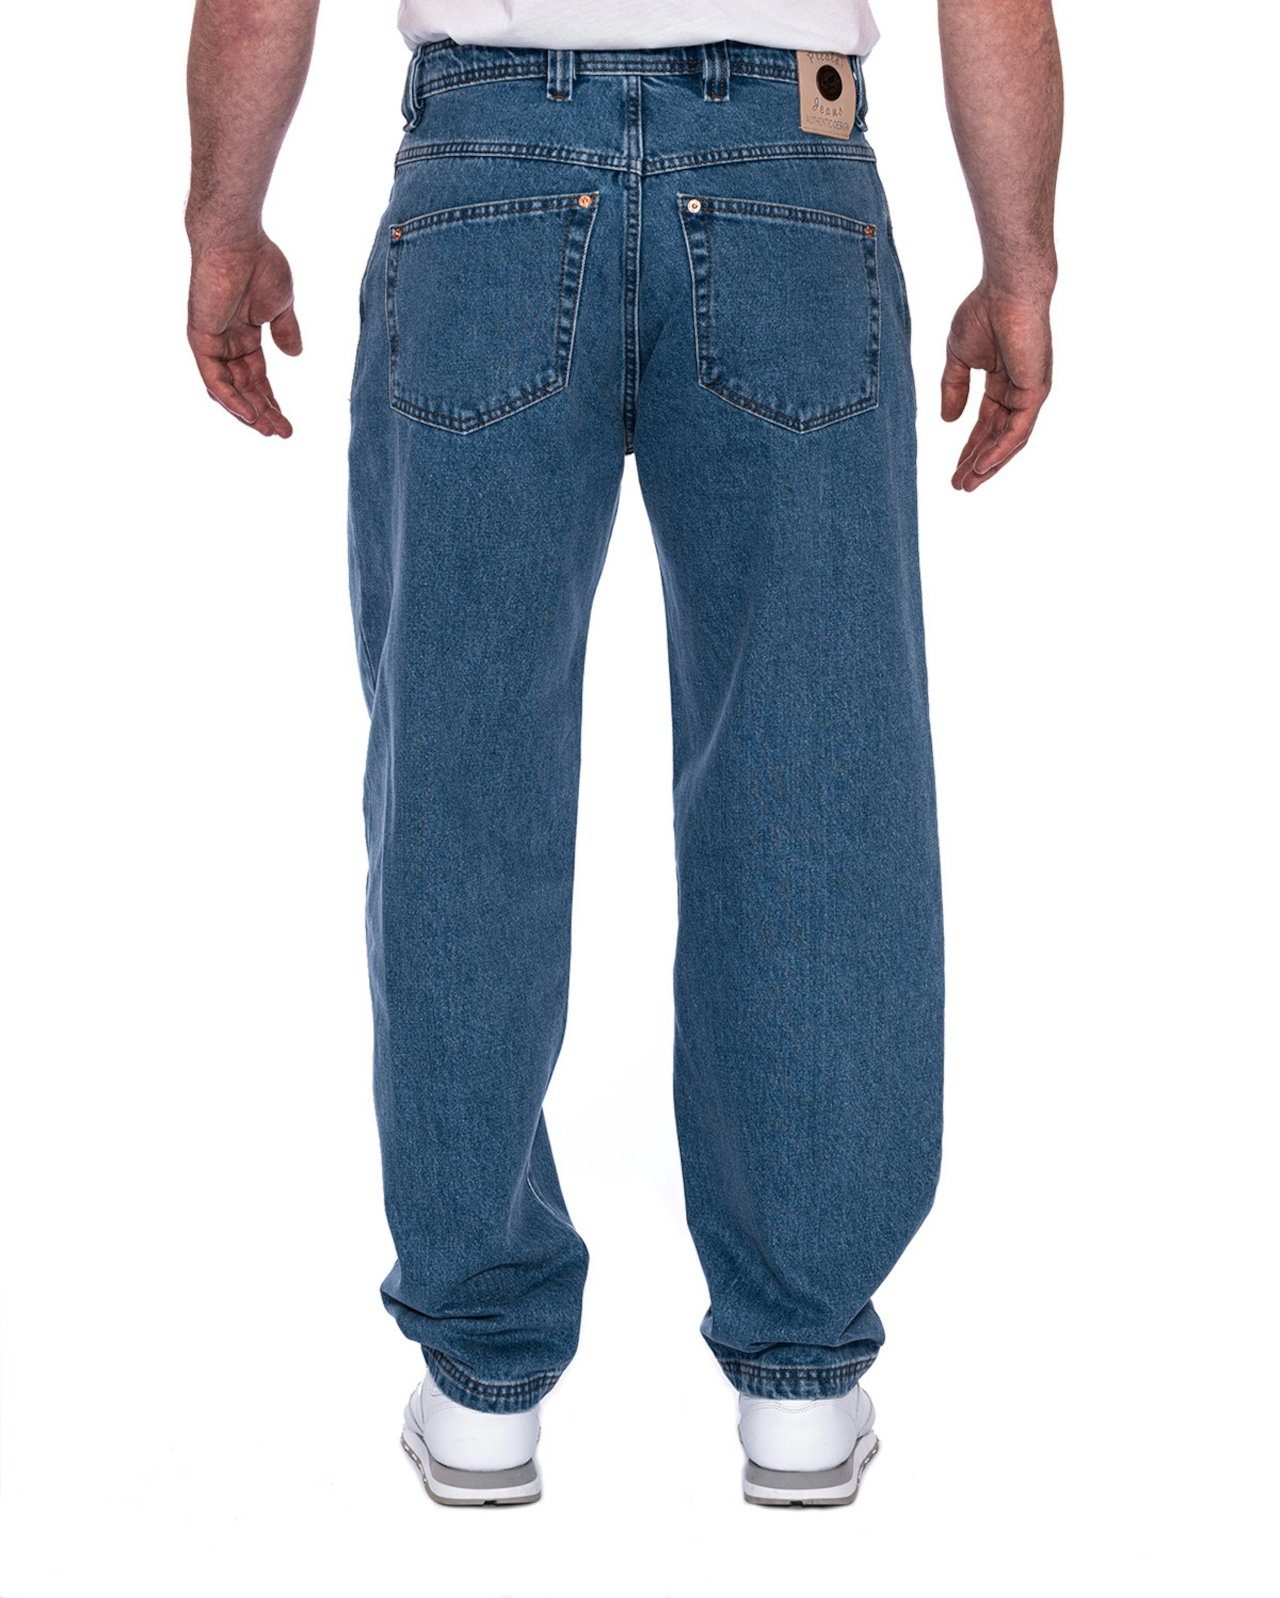 Jeans Five PICALDI 471 Jeans Weite Zicco Detroit Loose Pocket Jeans Fit,